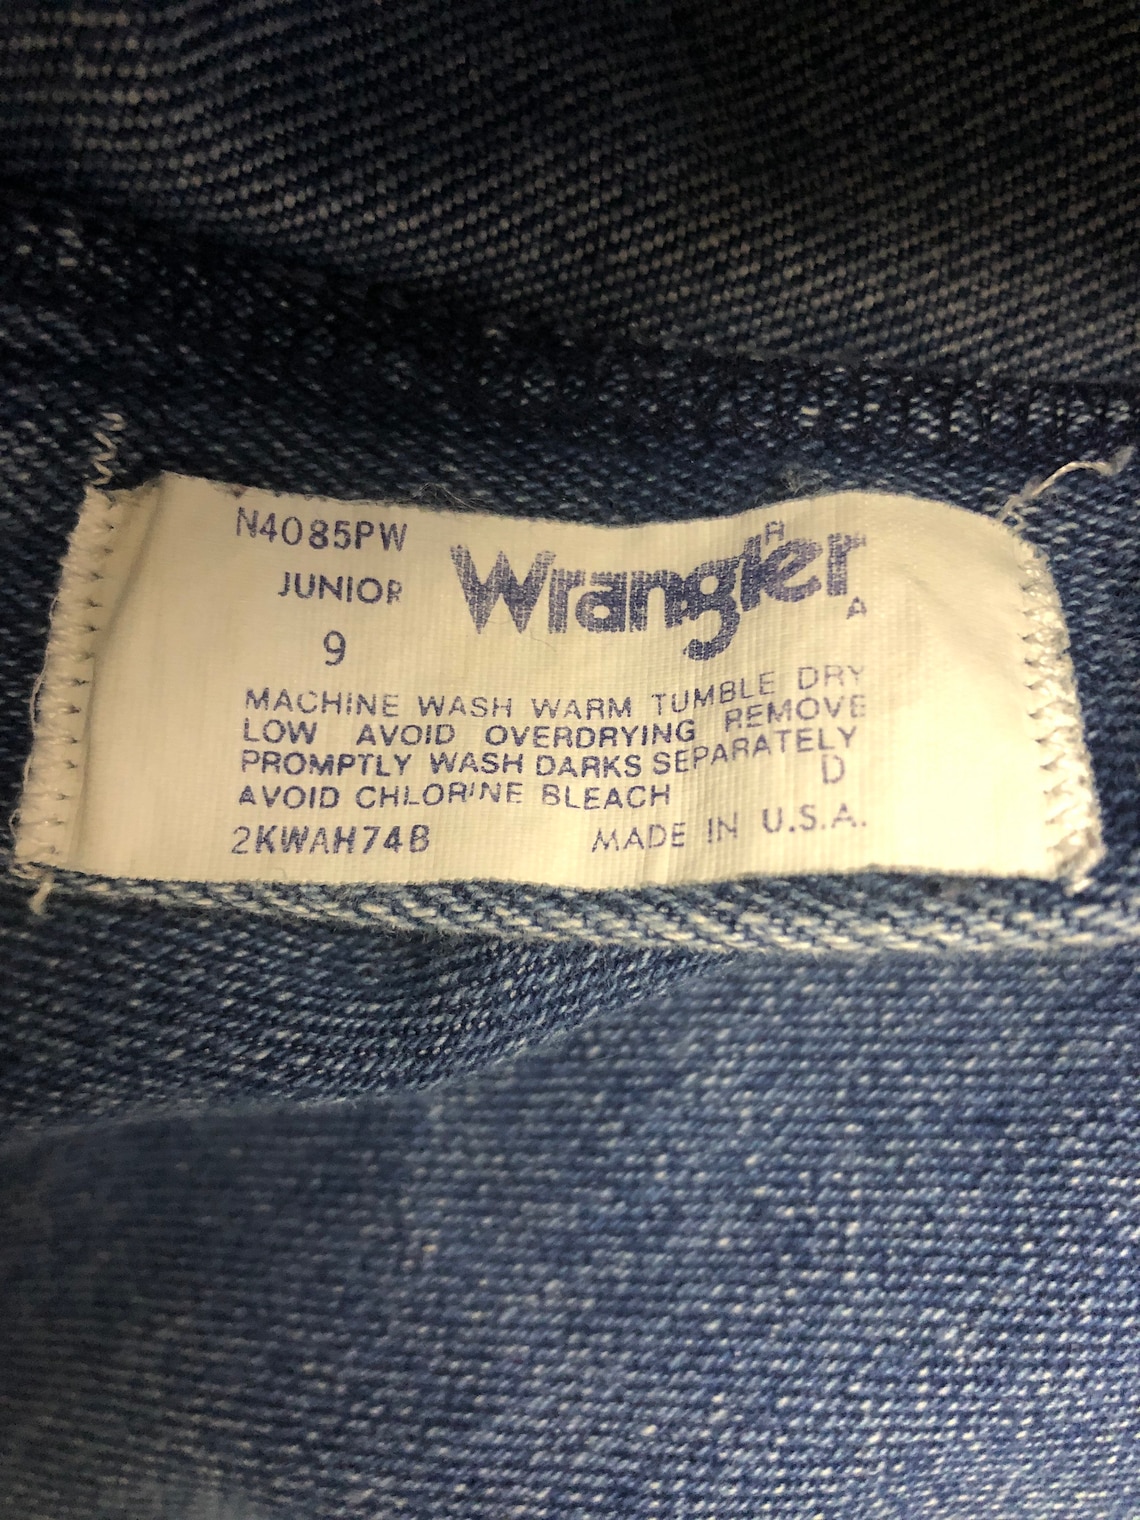 Vintage Rare 70s 80s Wrangler Denim Jeans Junior Fit High - Etsy